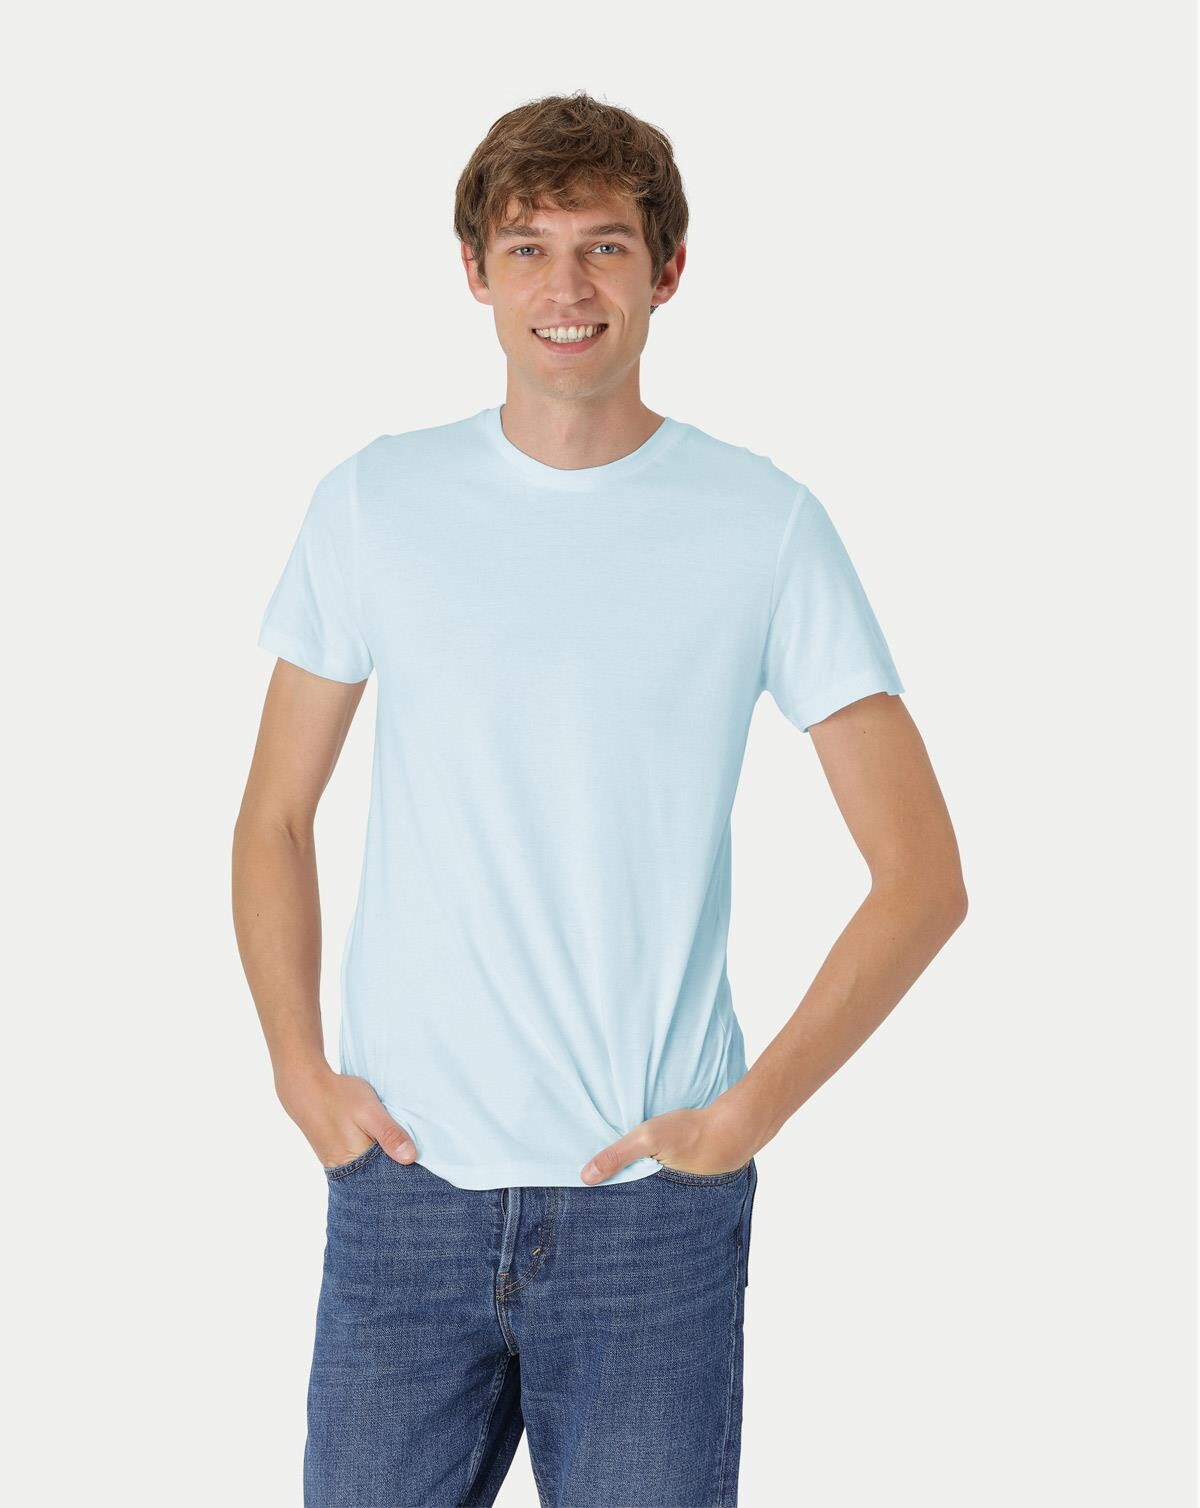 Neutral Økologisk T-shirt til - Tætsiddende (Lyseblå, XL)